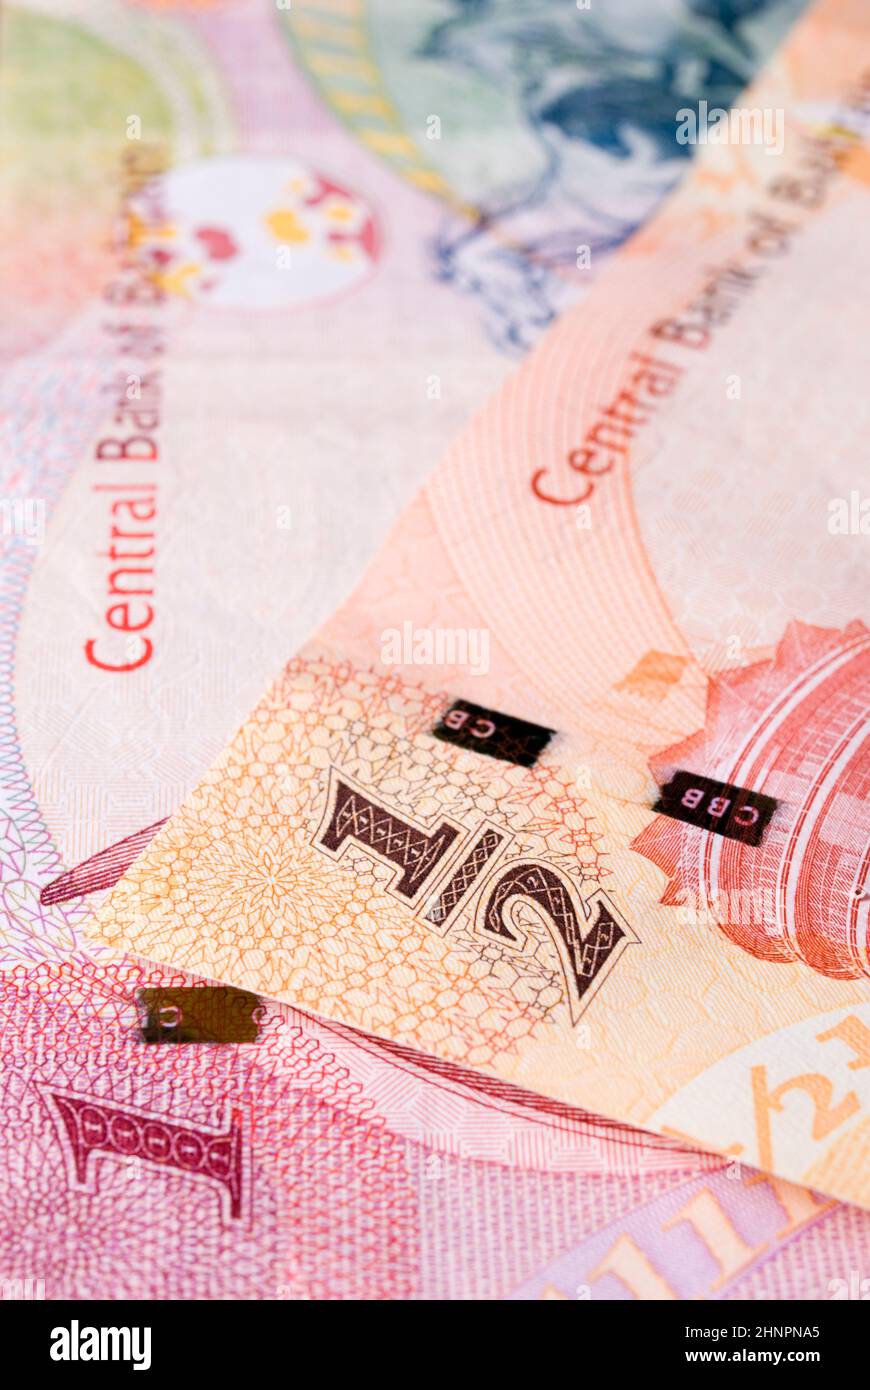 Money exchange manama bahrain hi-res stock photography and images - Alamy